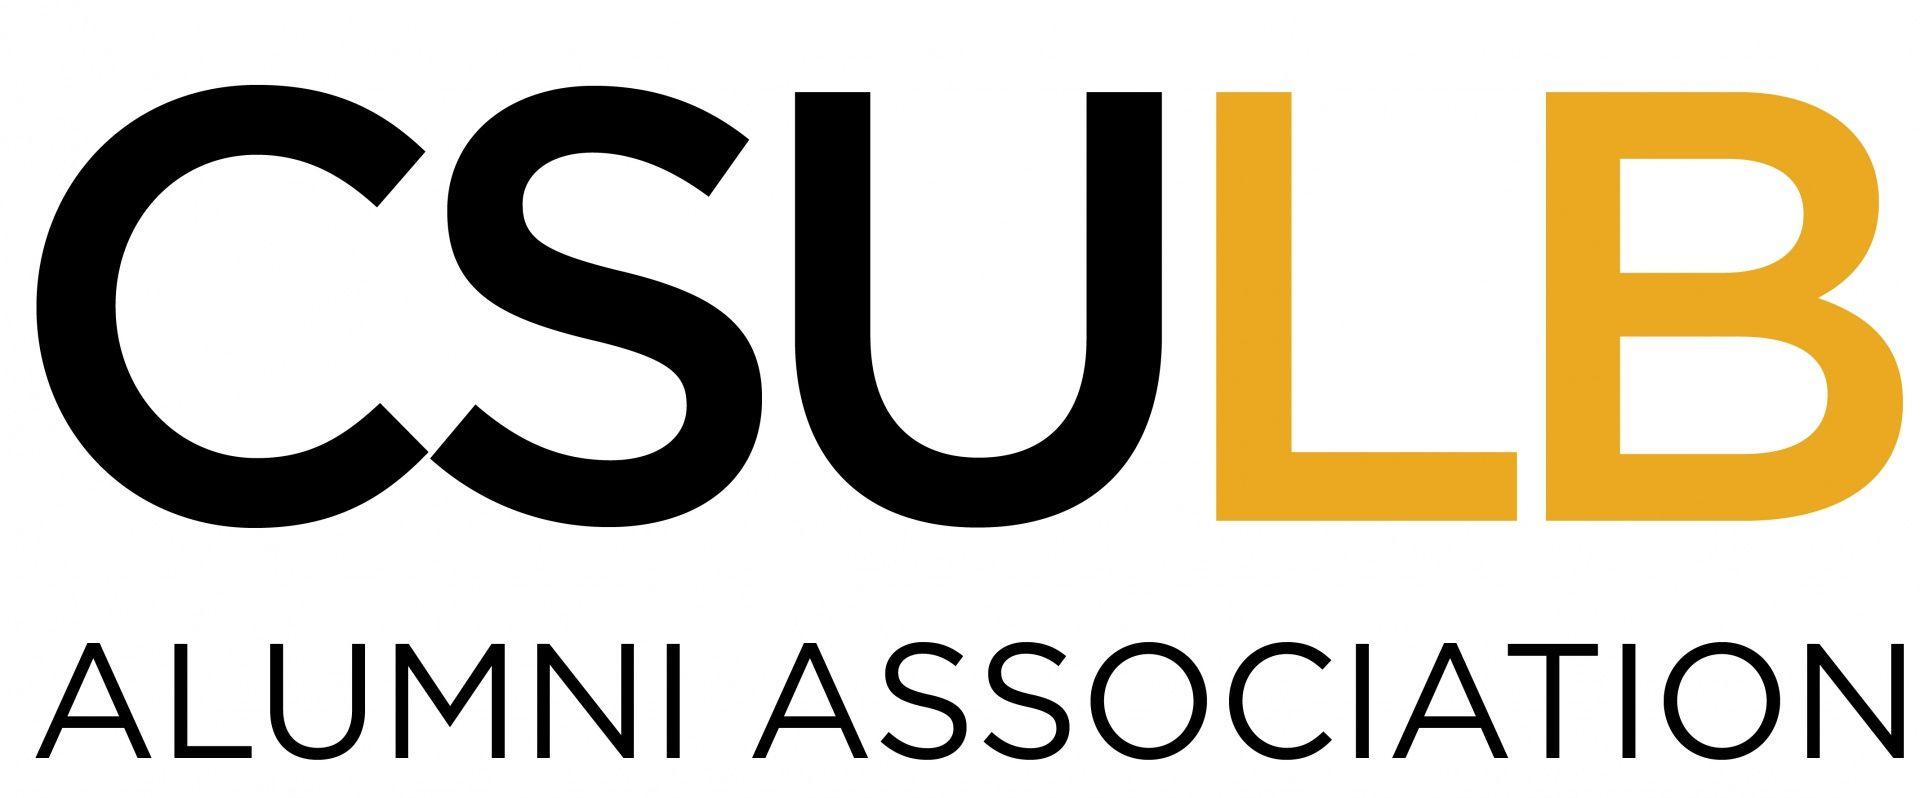 CSULB Logo - Homecoming | California State University, Long Beach